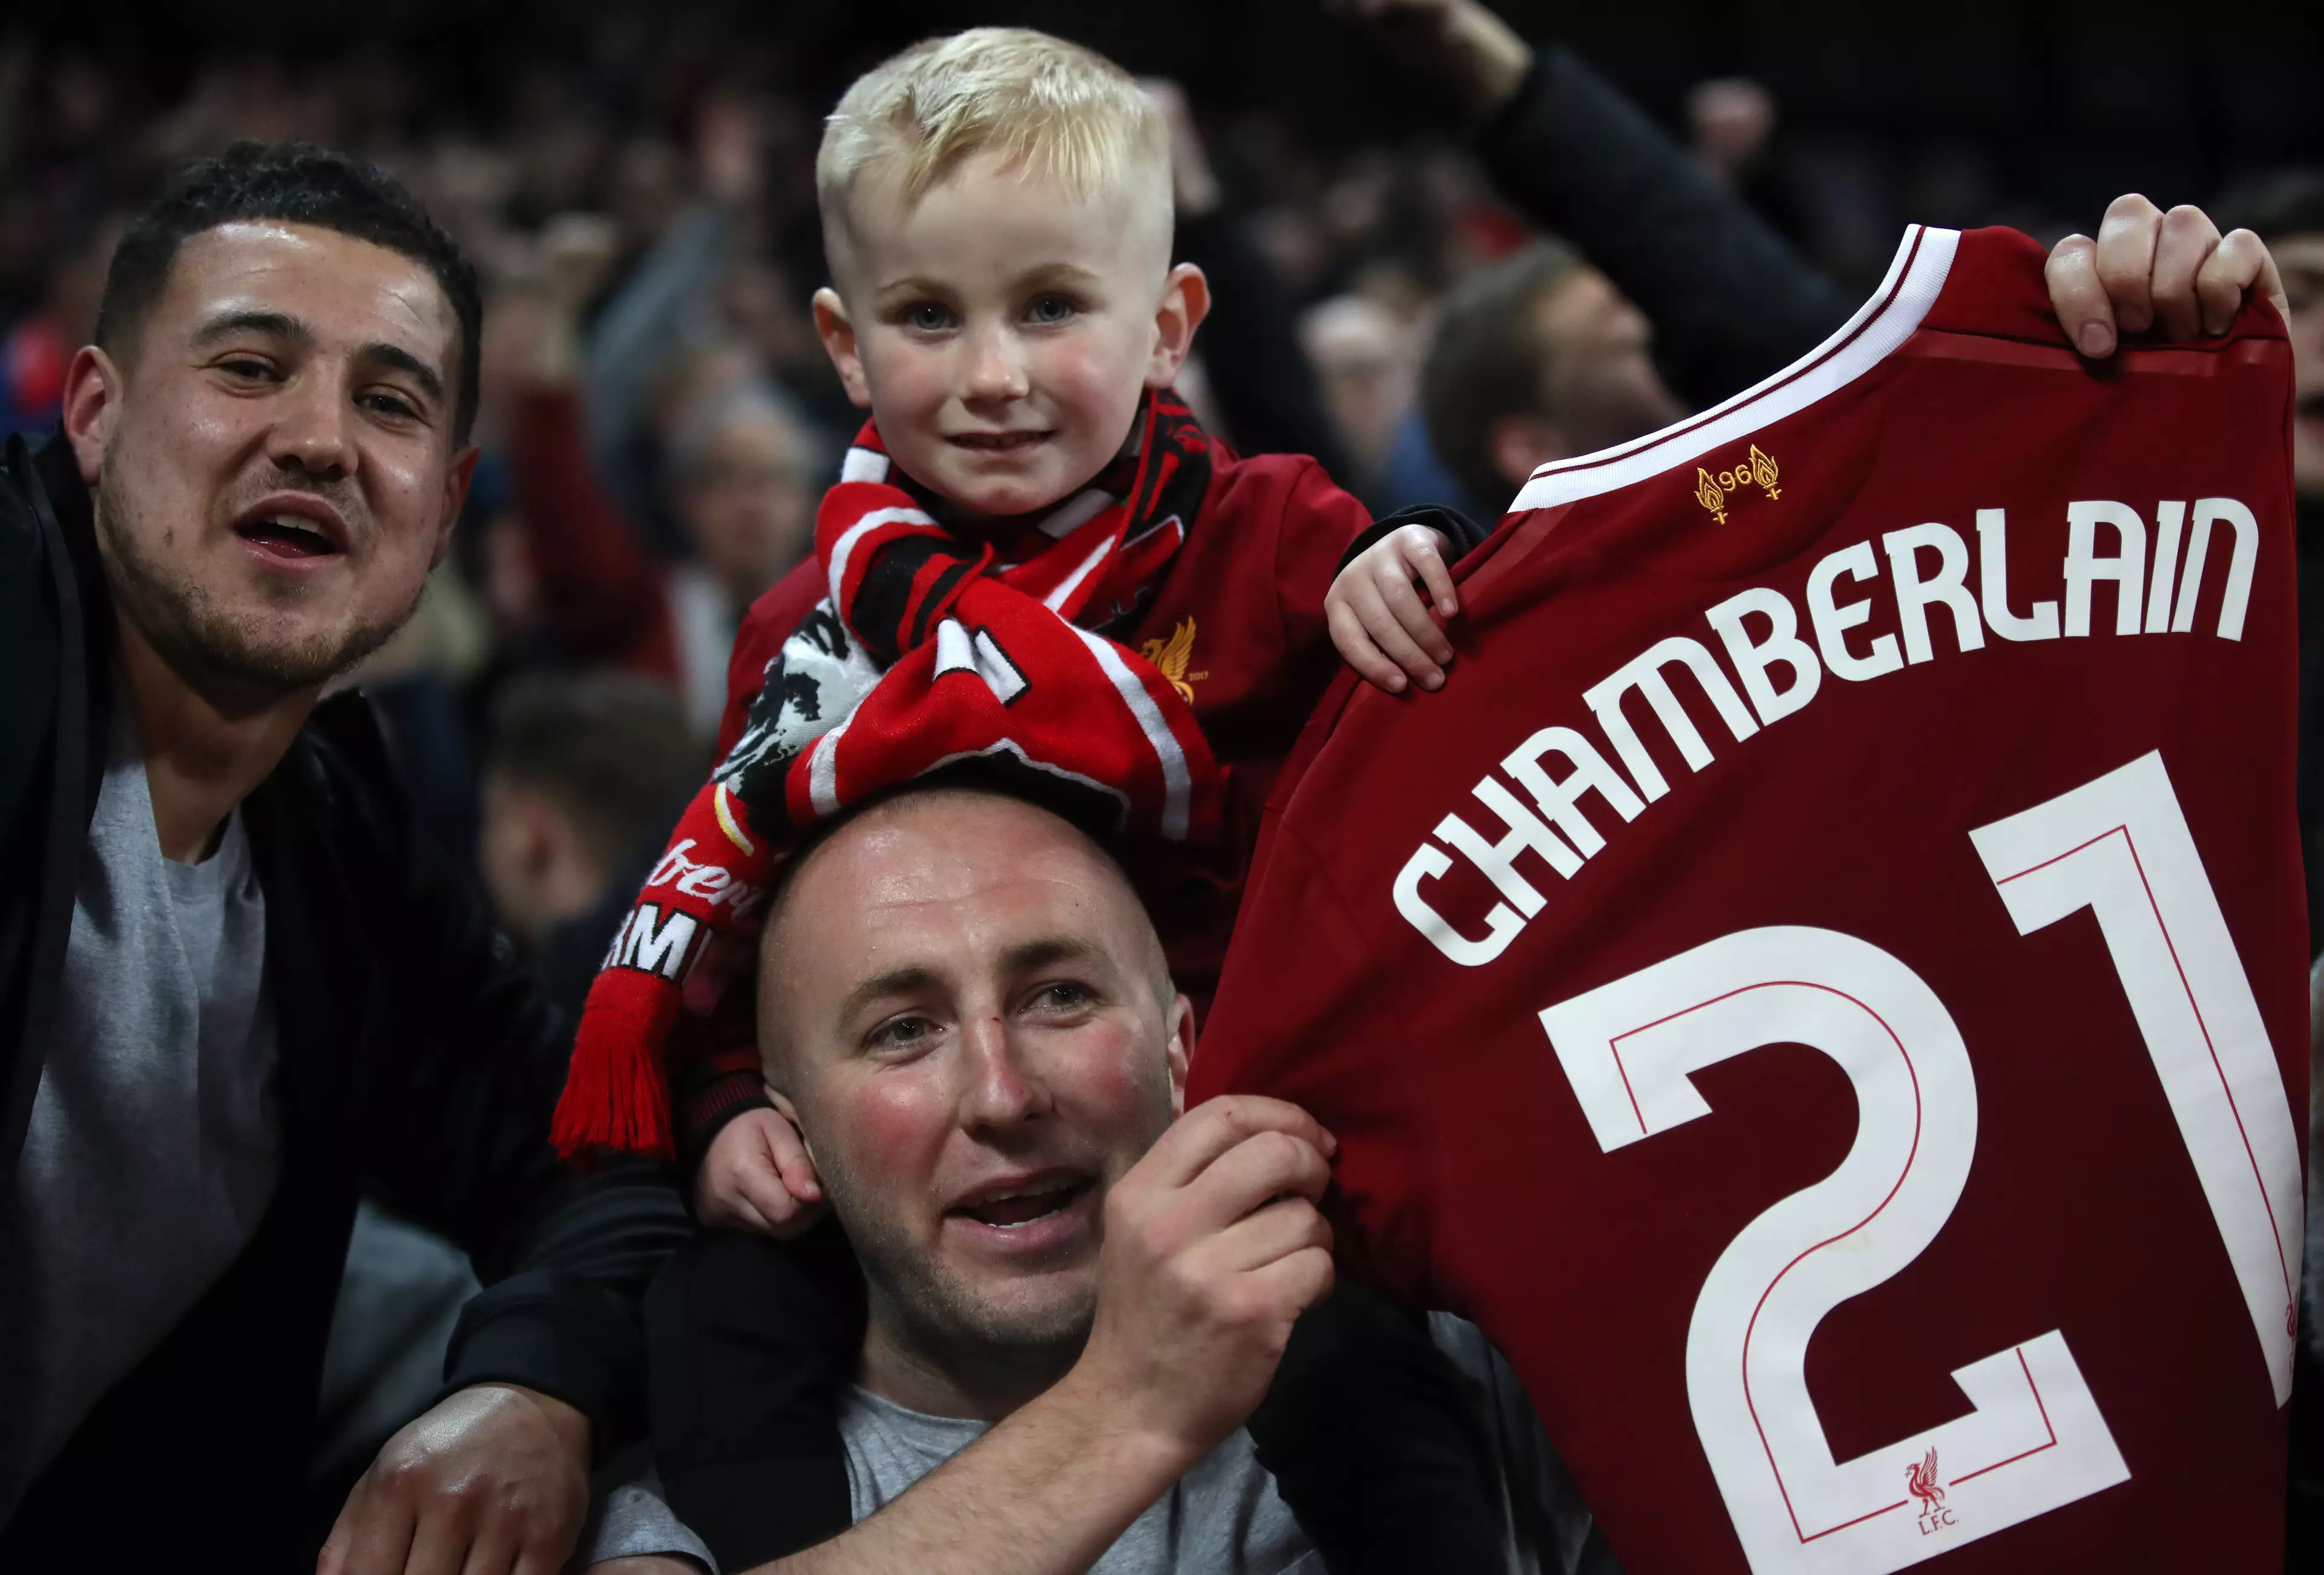 Liverpool fan holds up Oxlade-Chamberlain's shirt. Image: PA